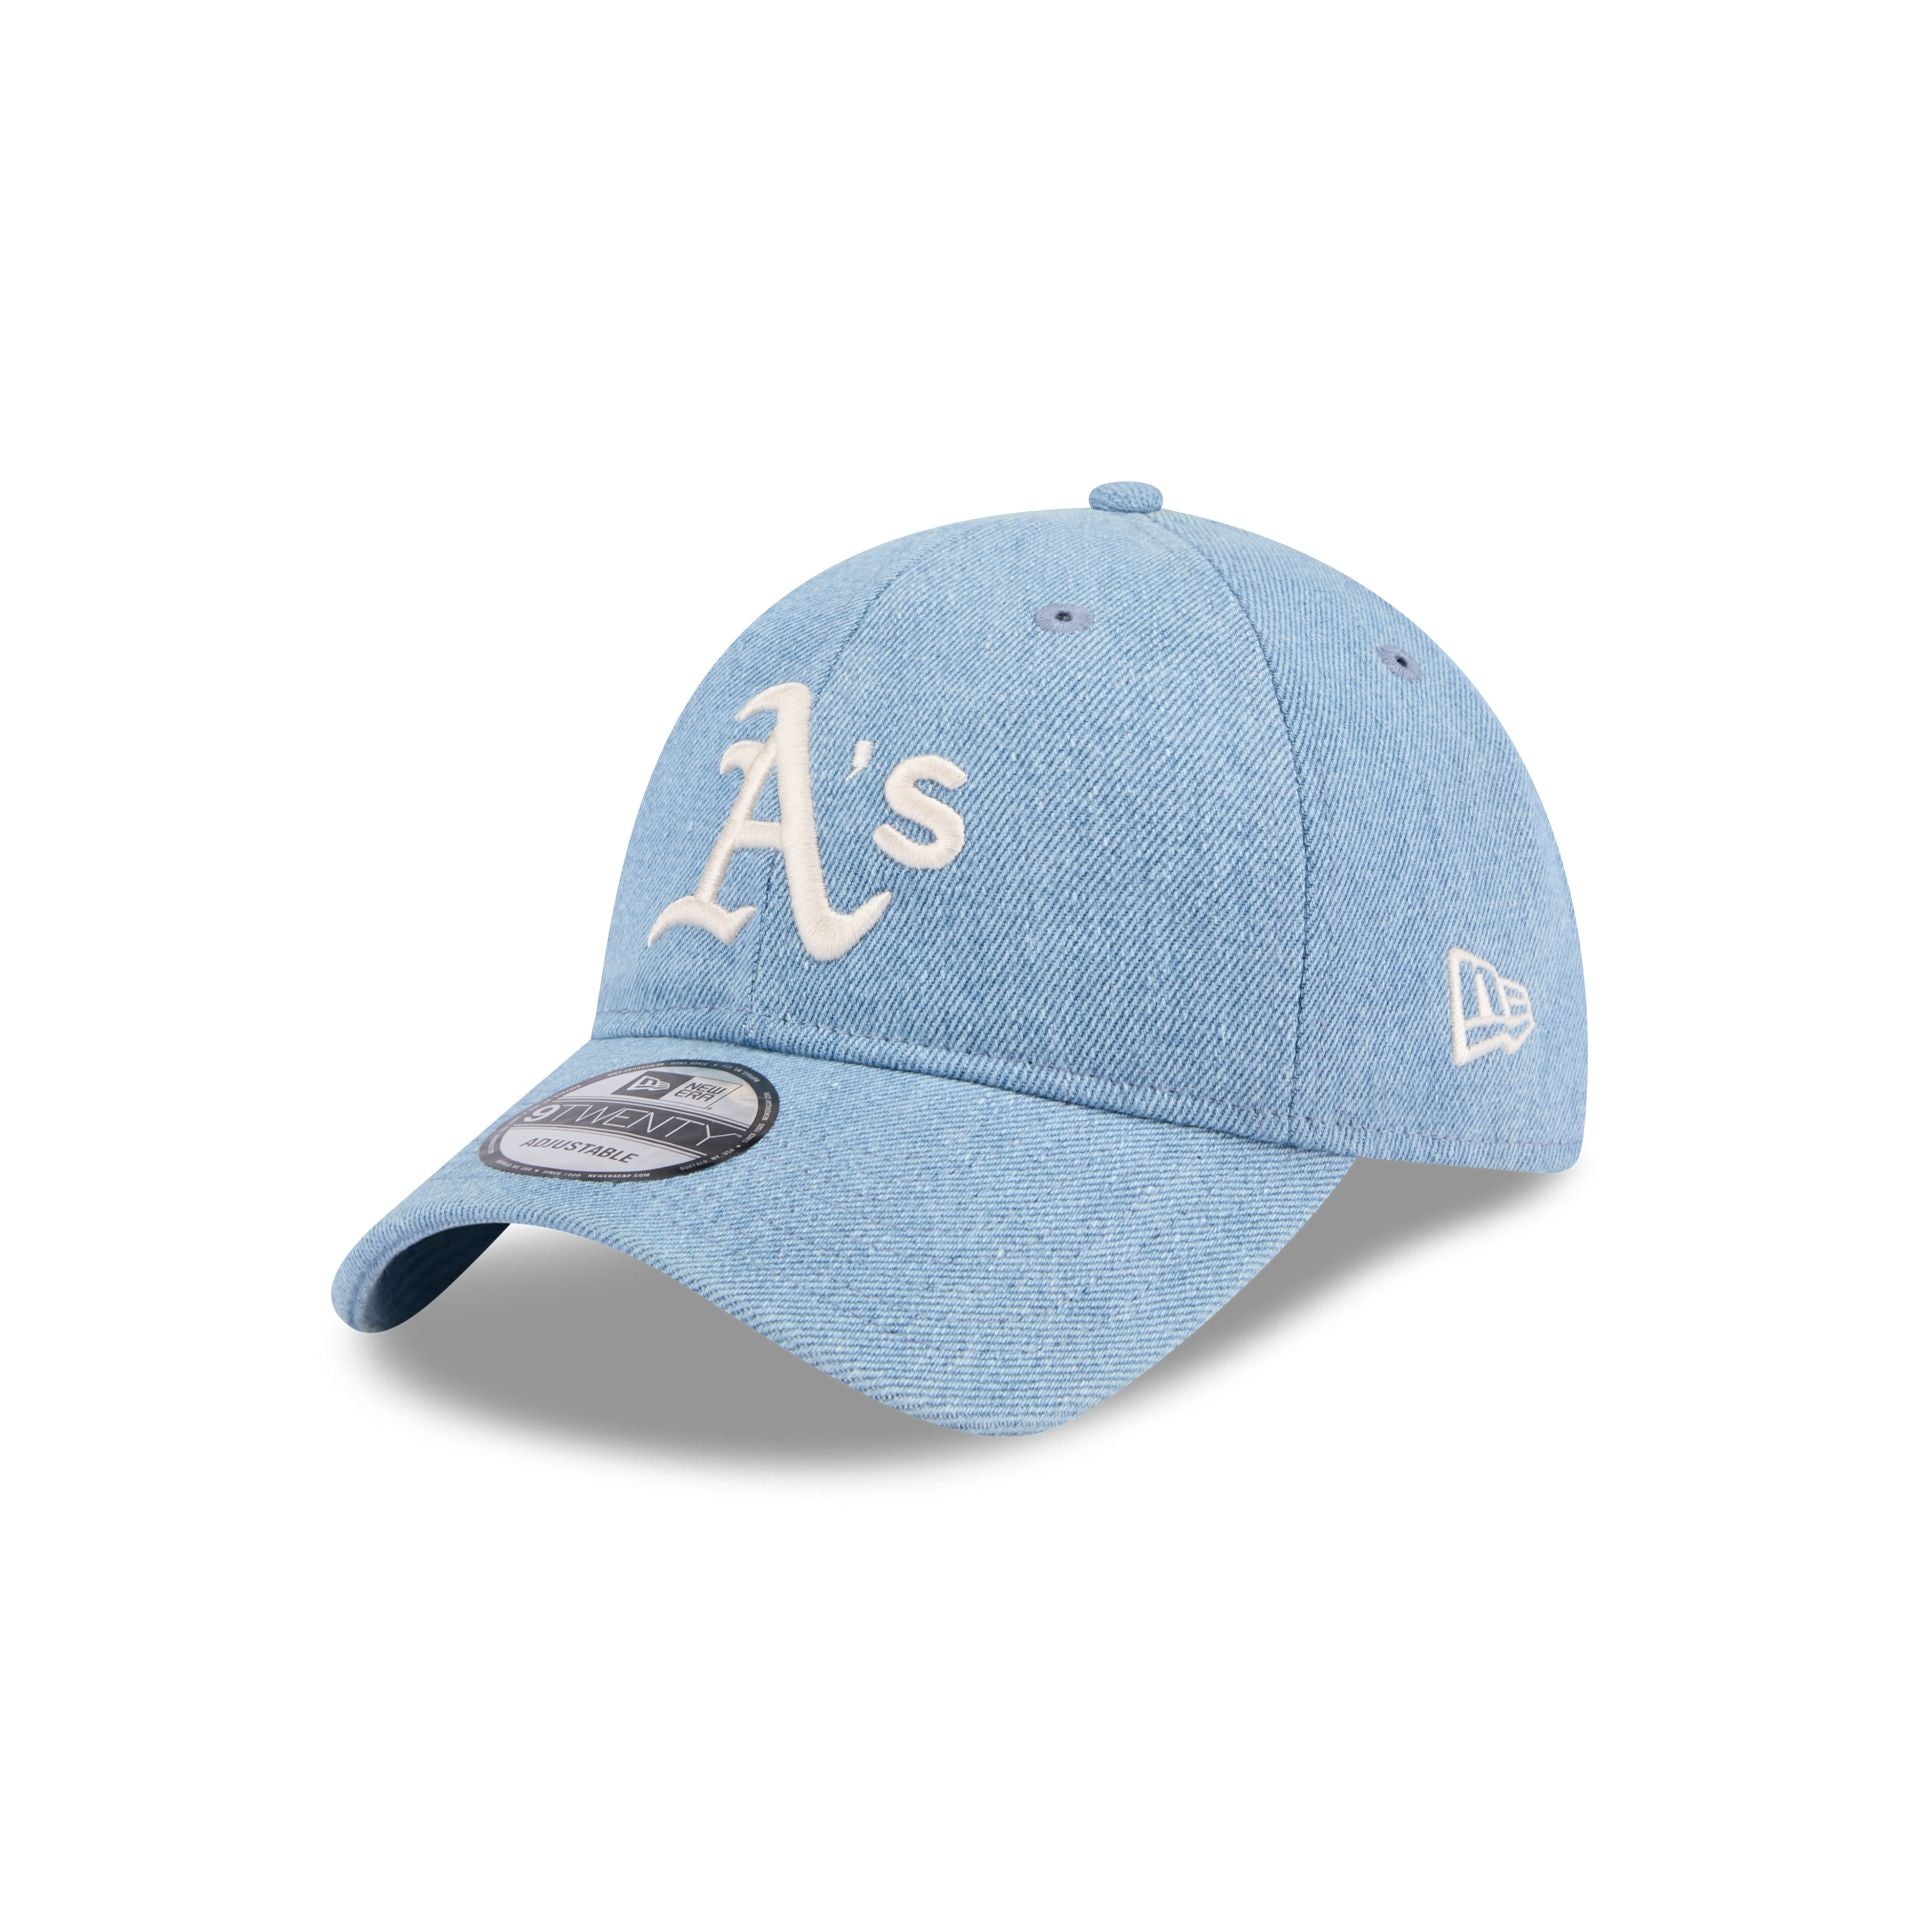 Oakland Athletics Washed Denim 9TWENTY Adjustable Hat, Blue, MLB by New Era